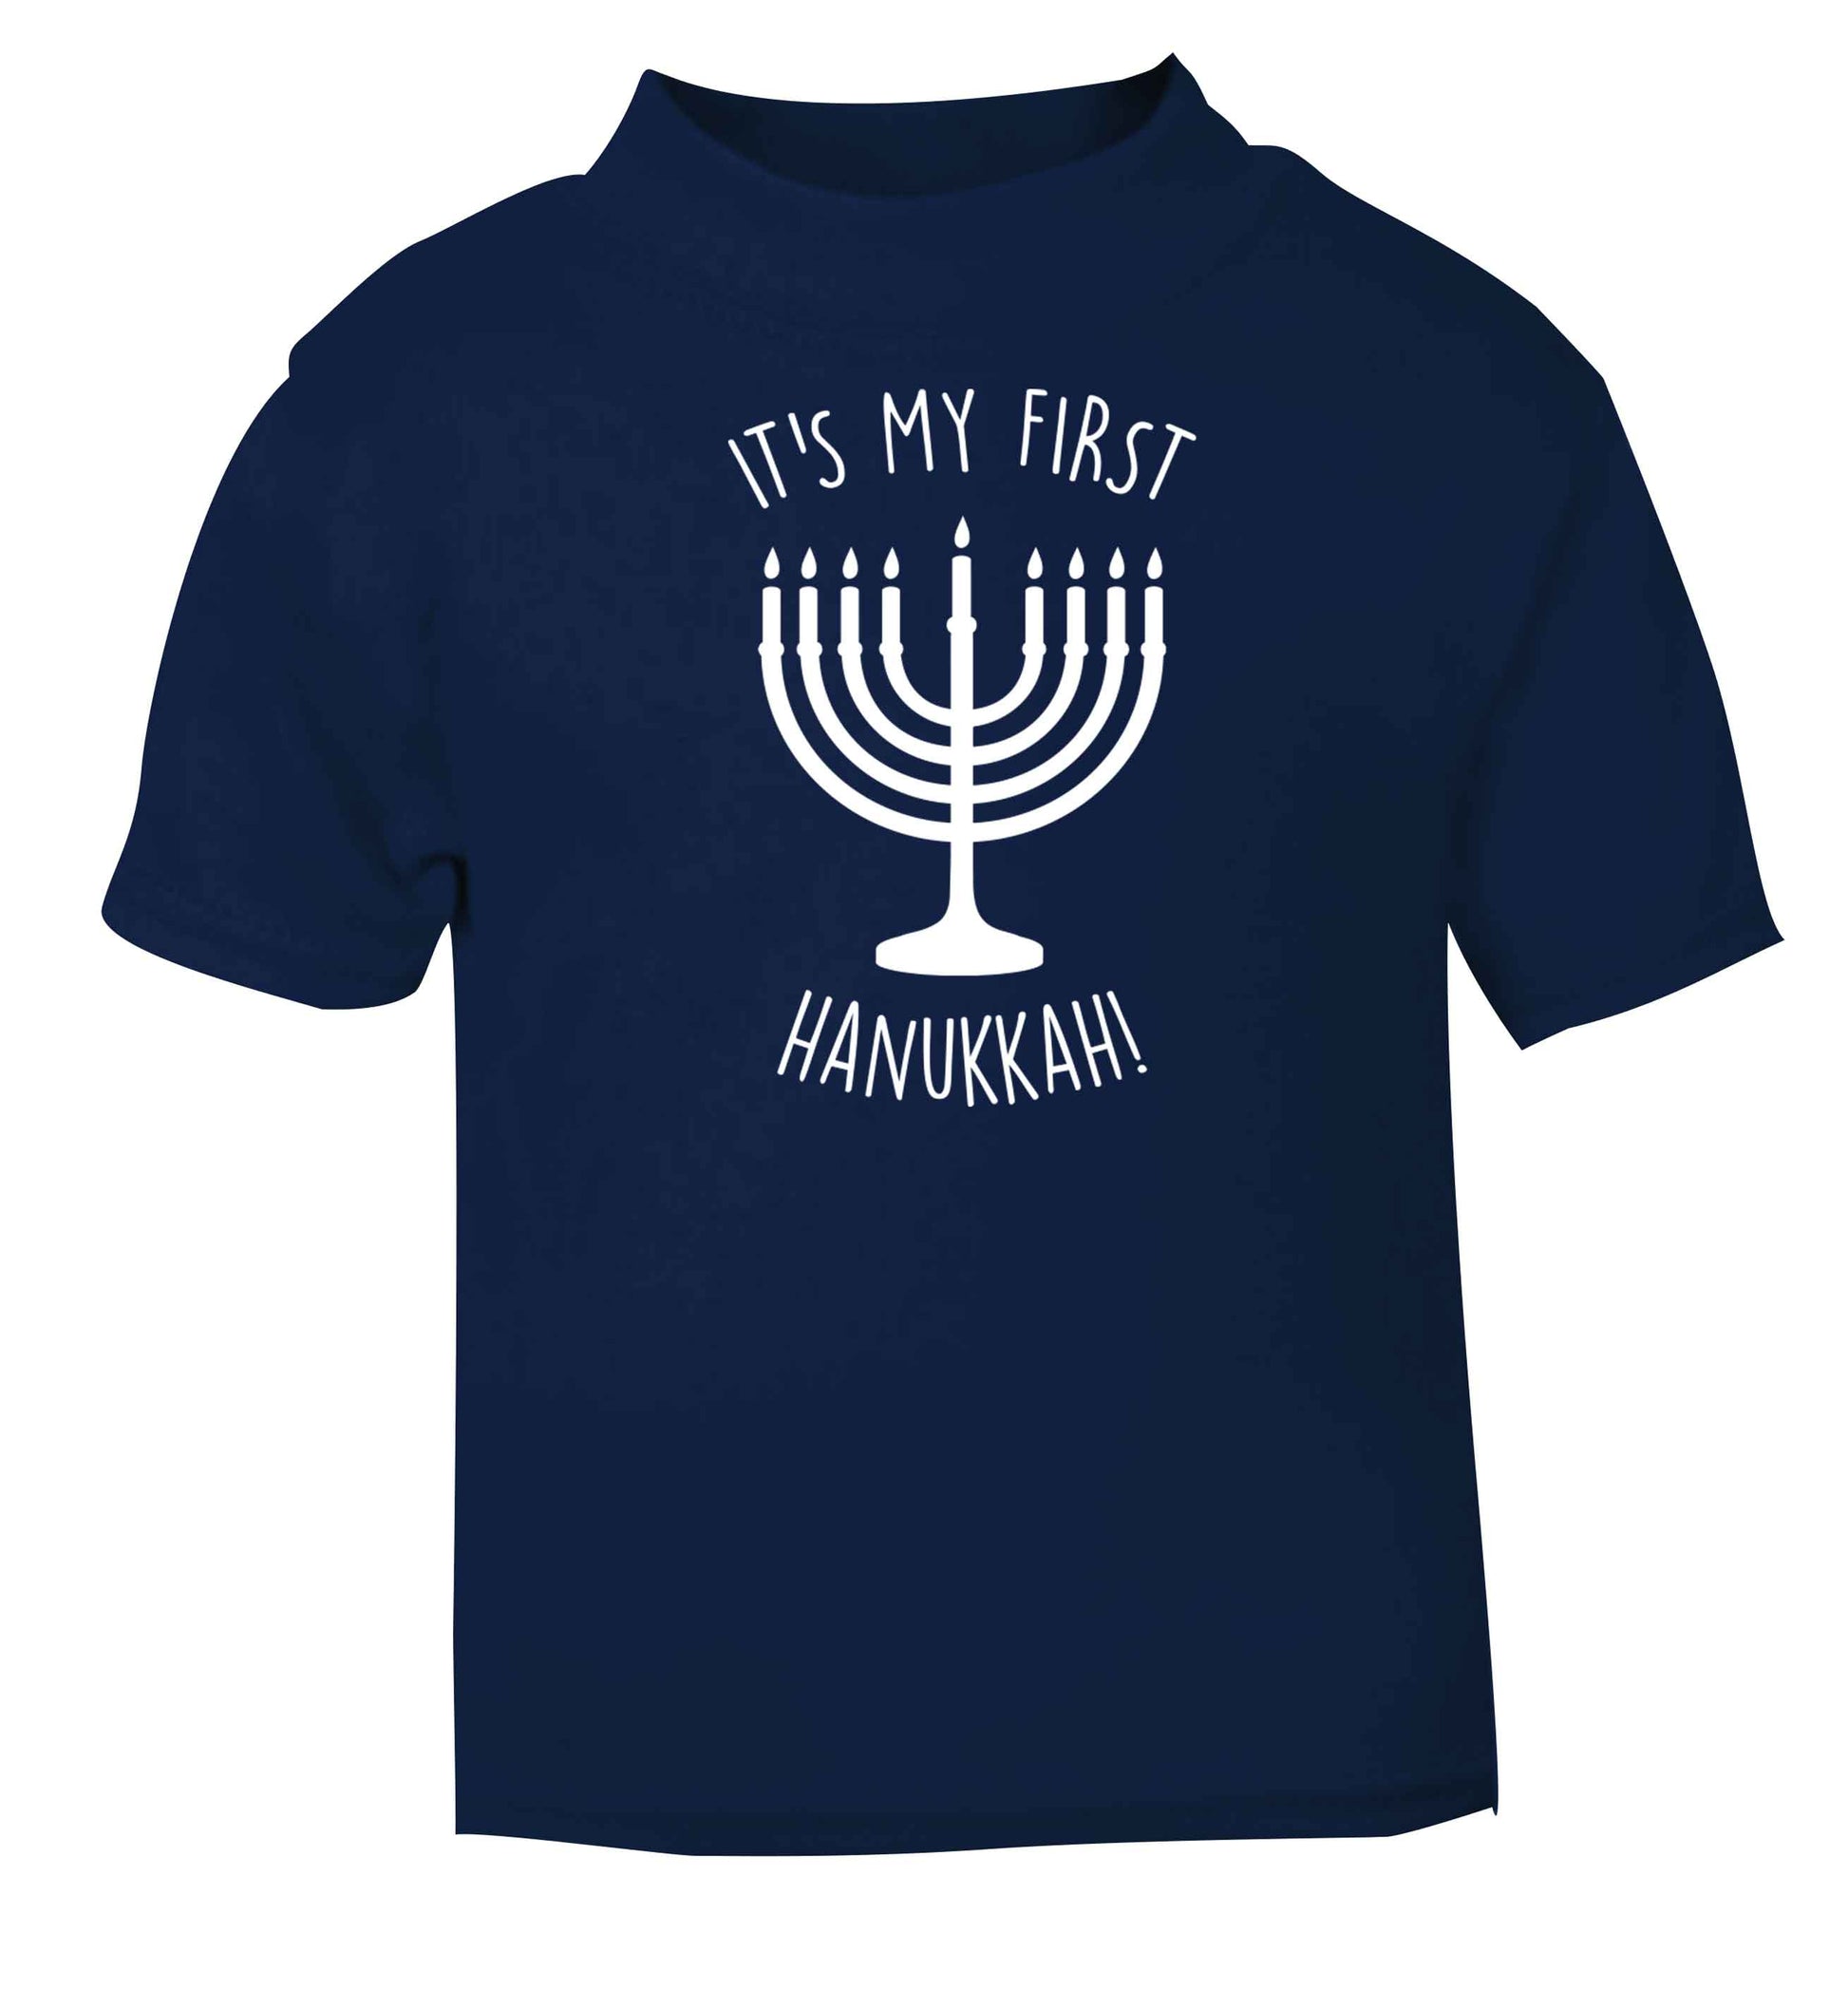 It's my first hanukkah navy baby toddler Tshirt 2 Years